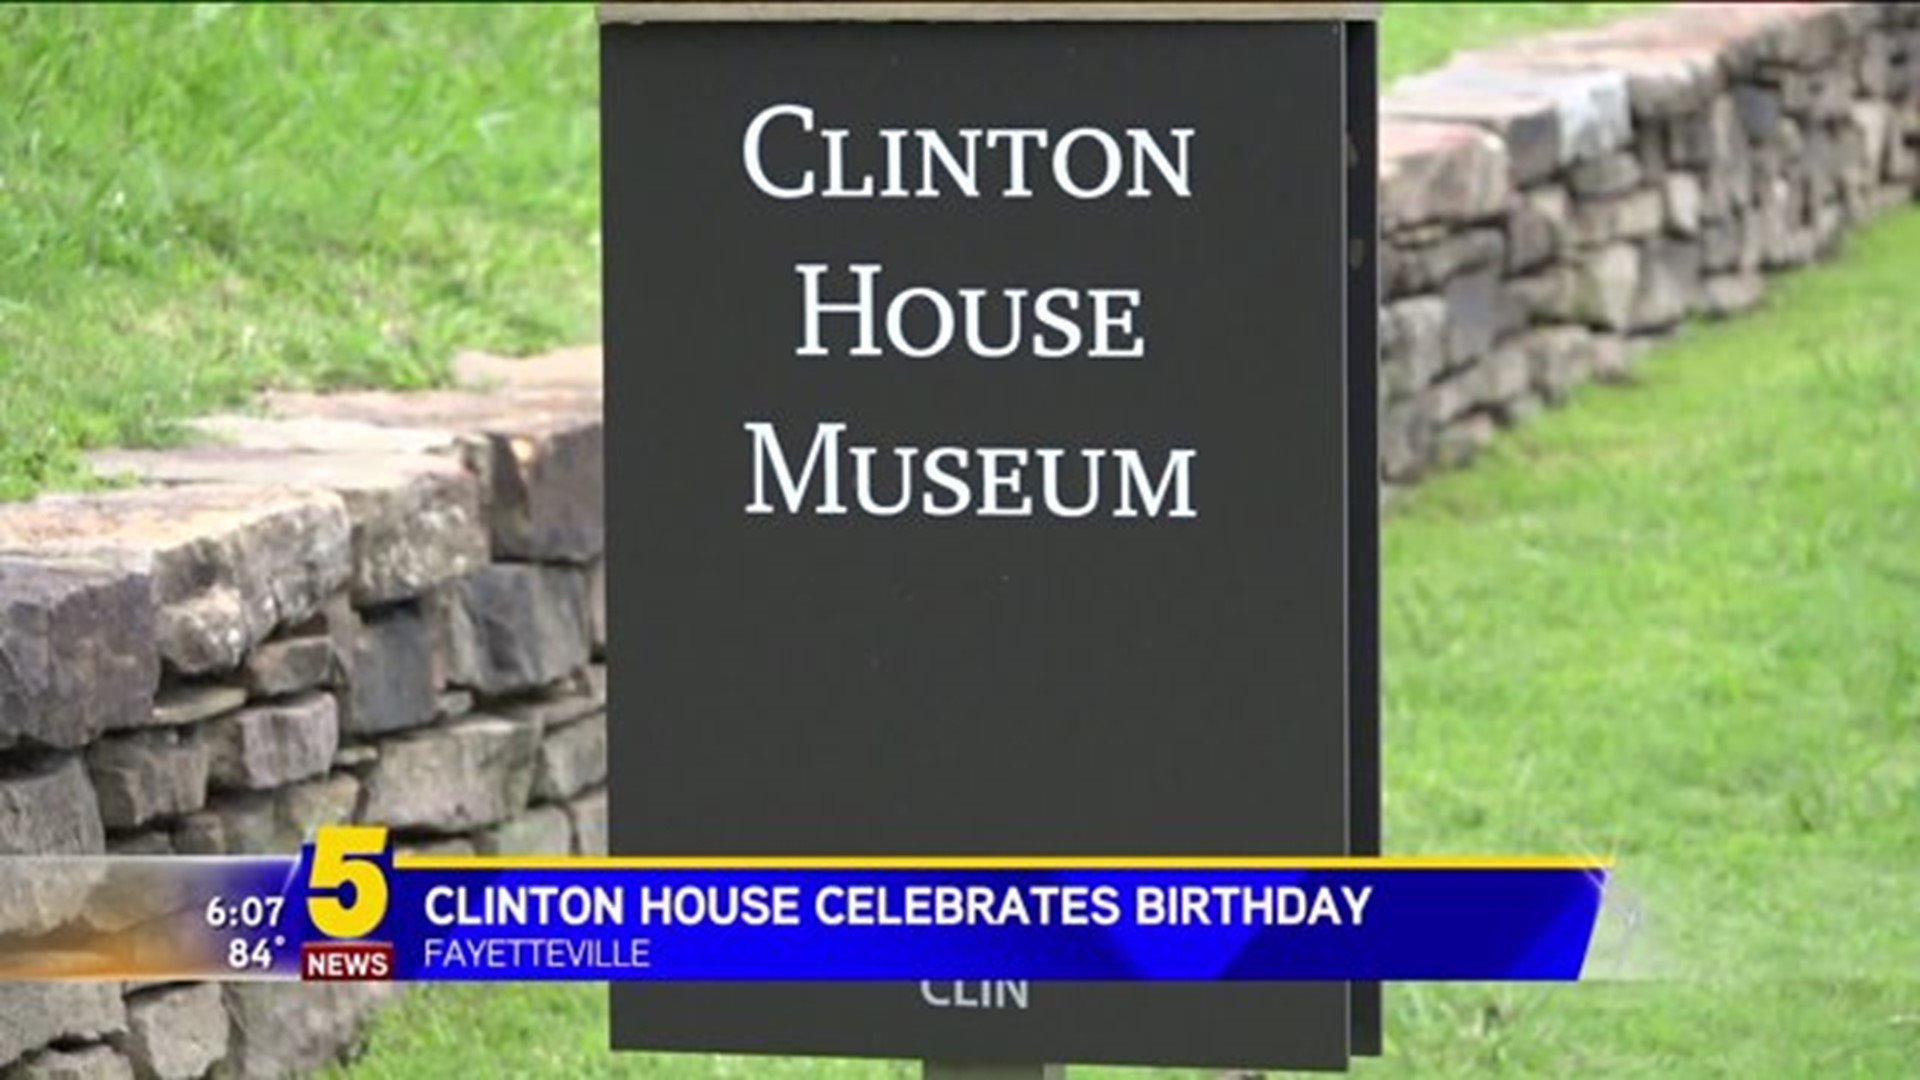 Clinton House Celebrates Birthday